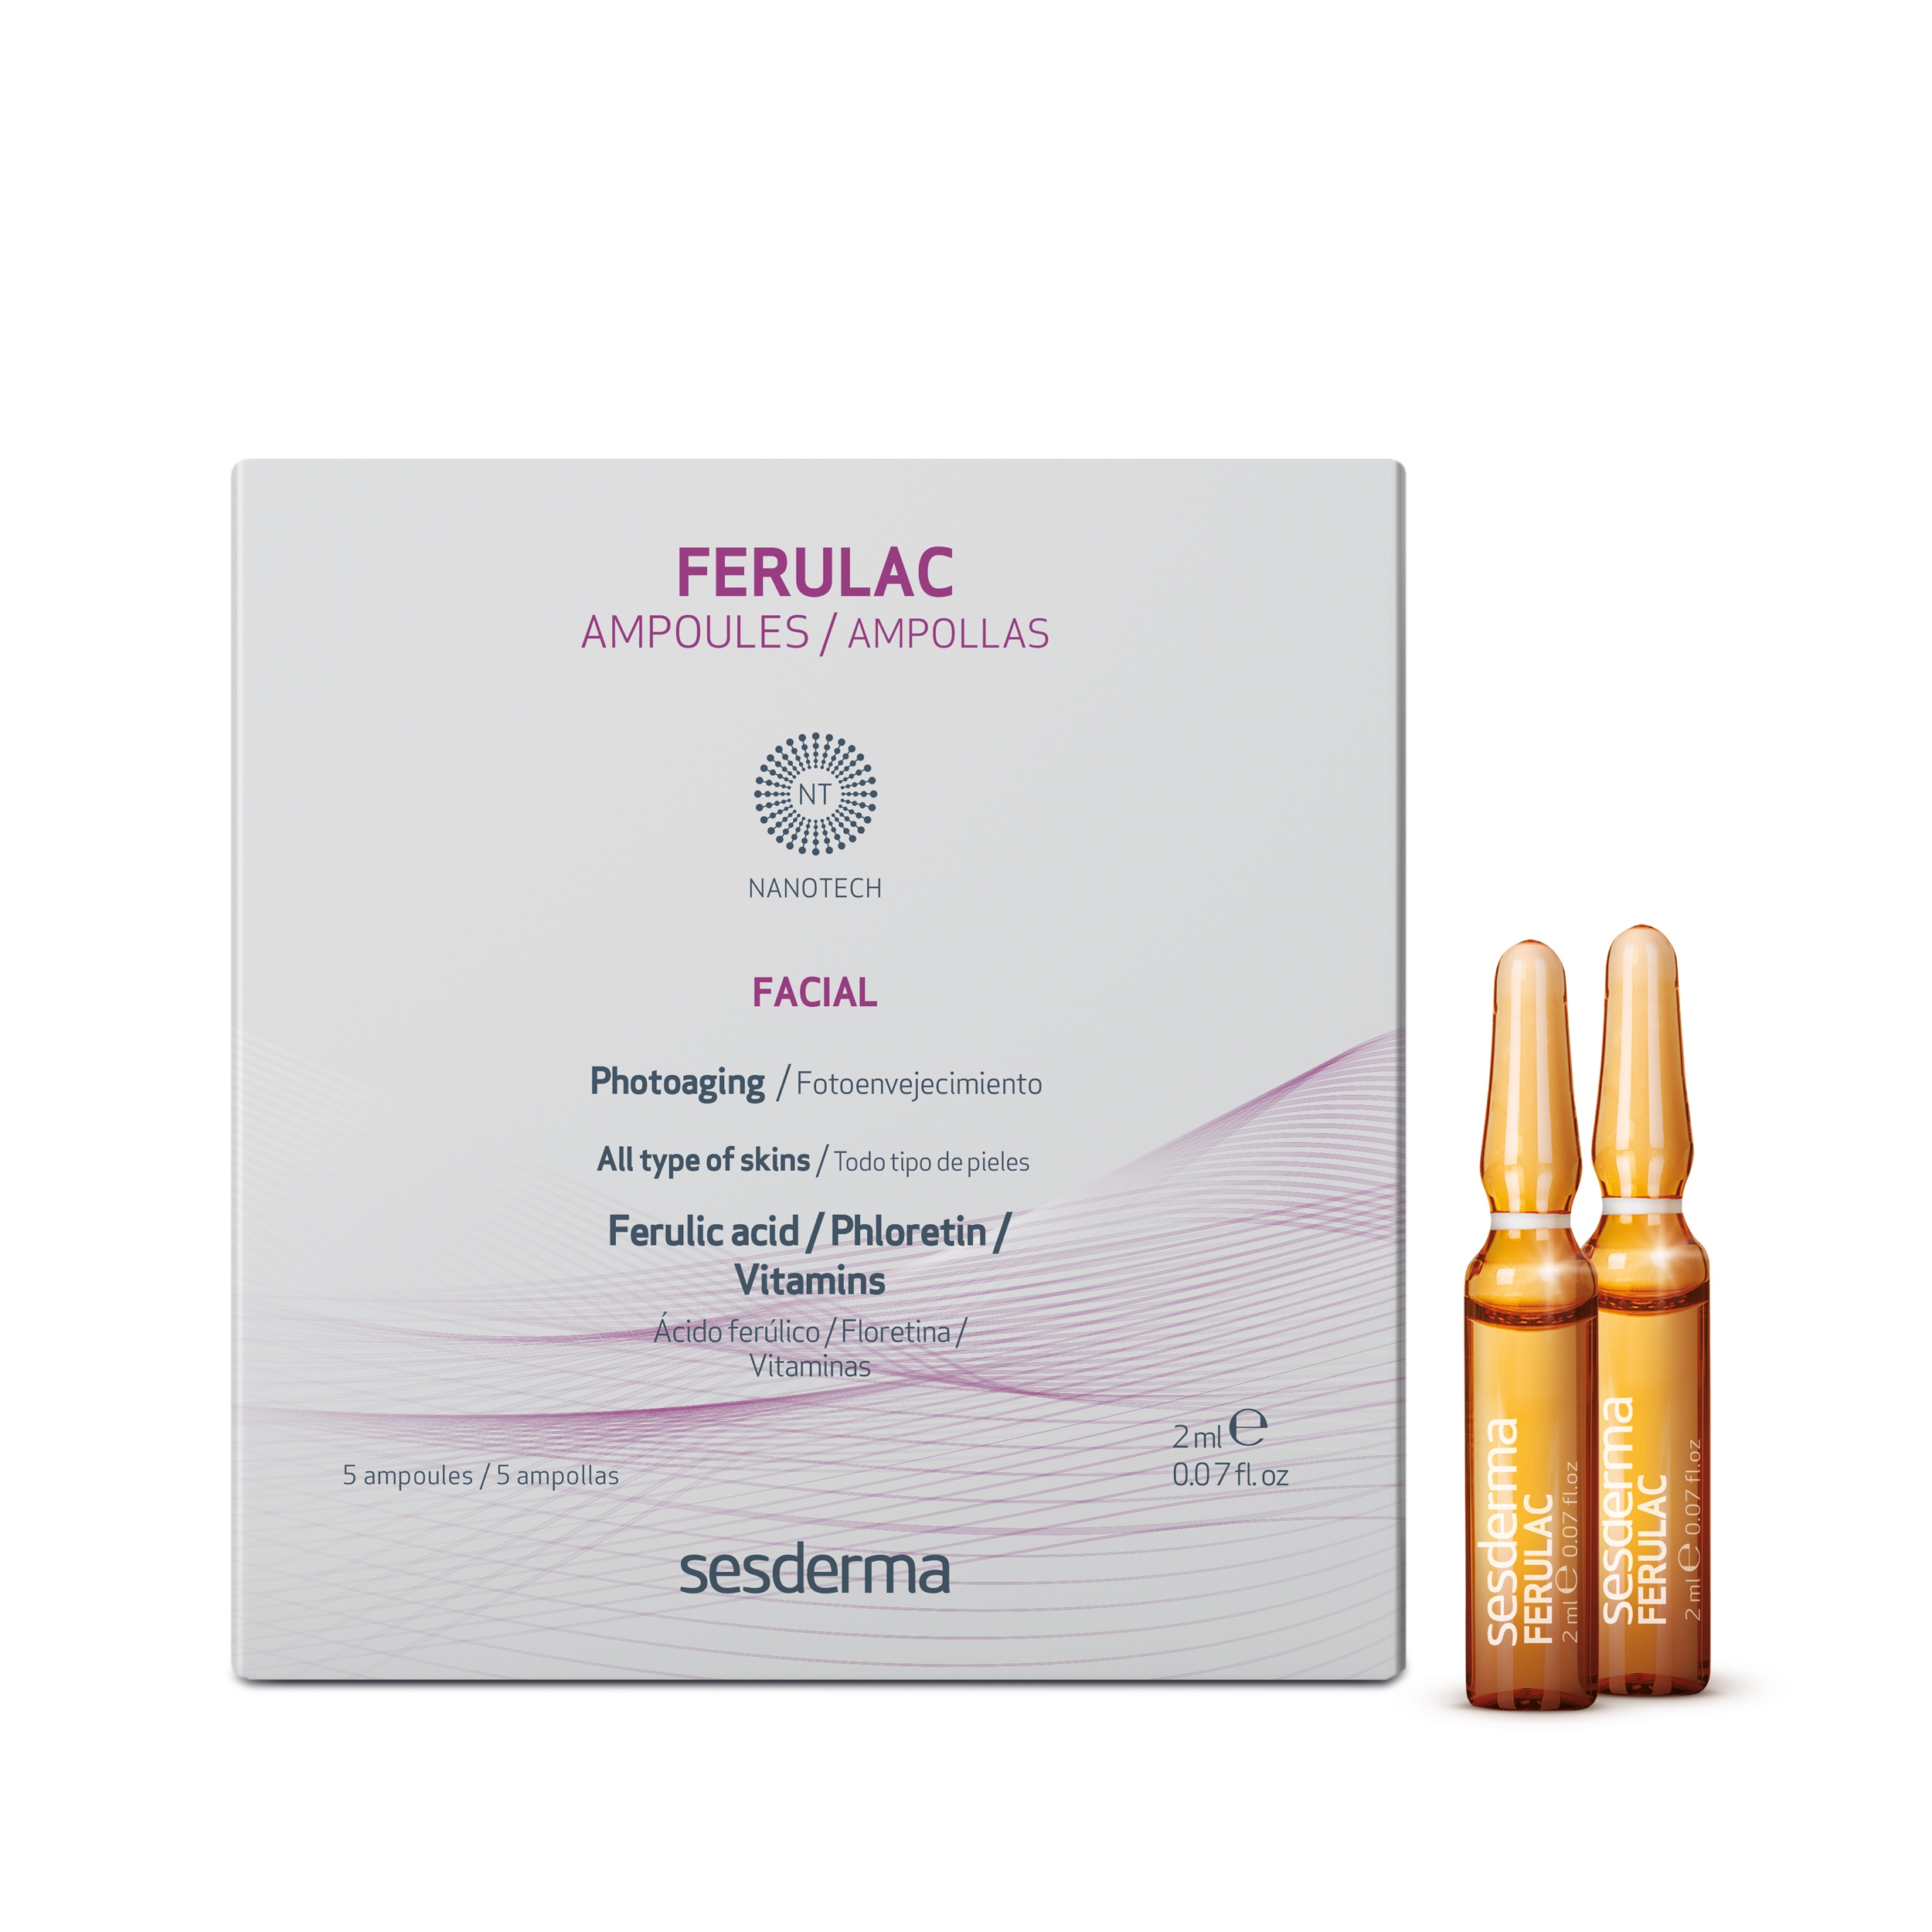 FERULAC Liposomal Ampoulles 5 x 2ml